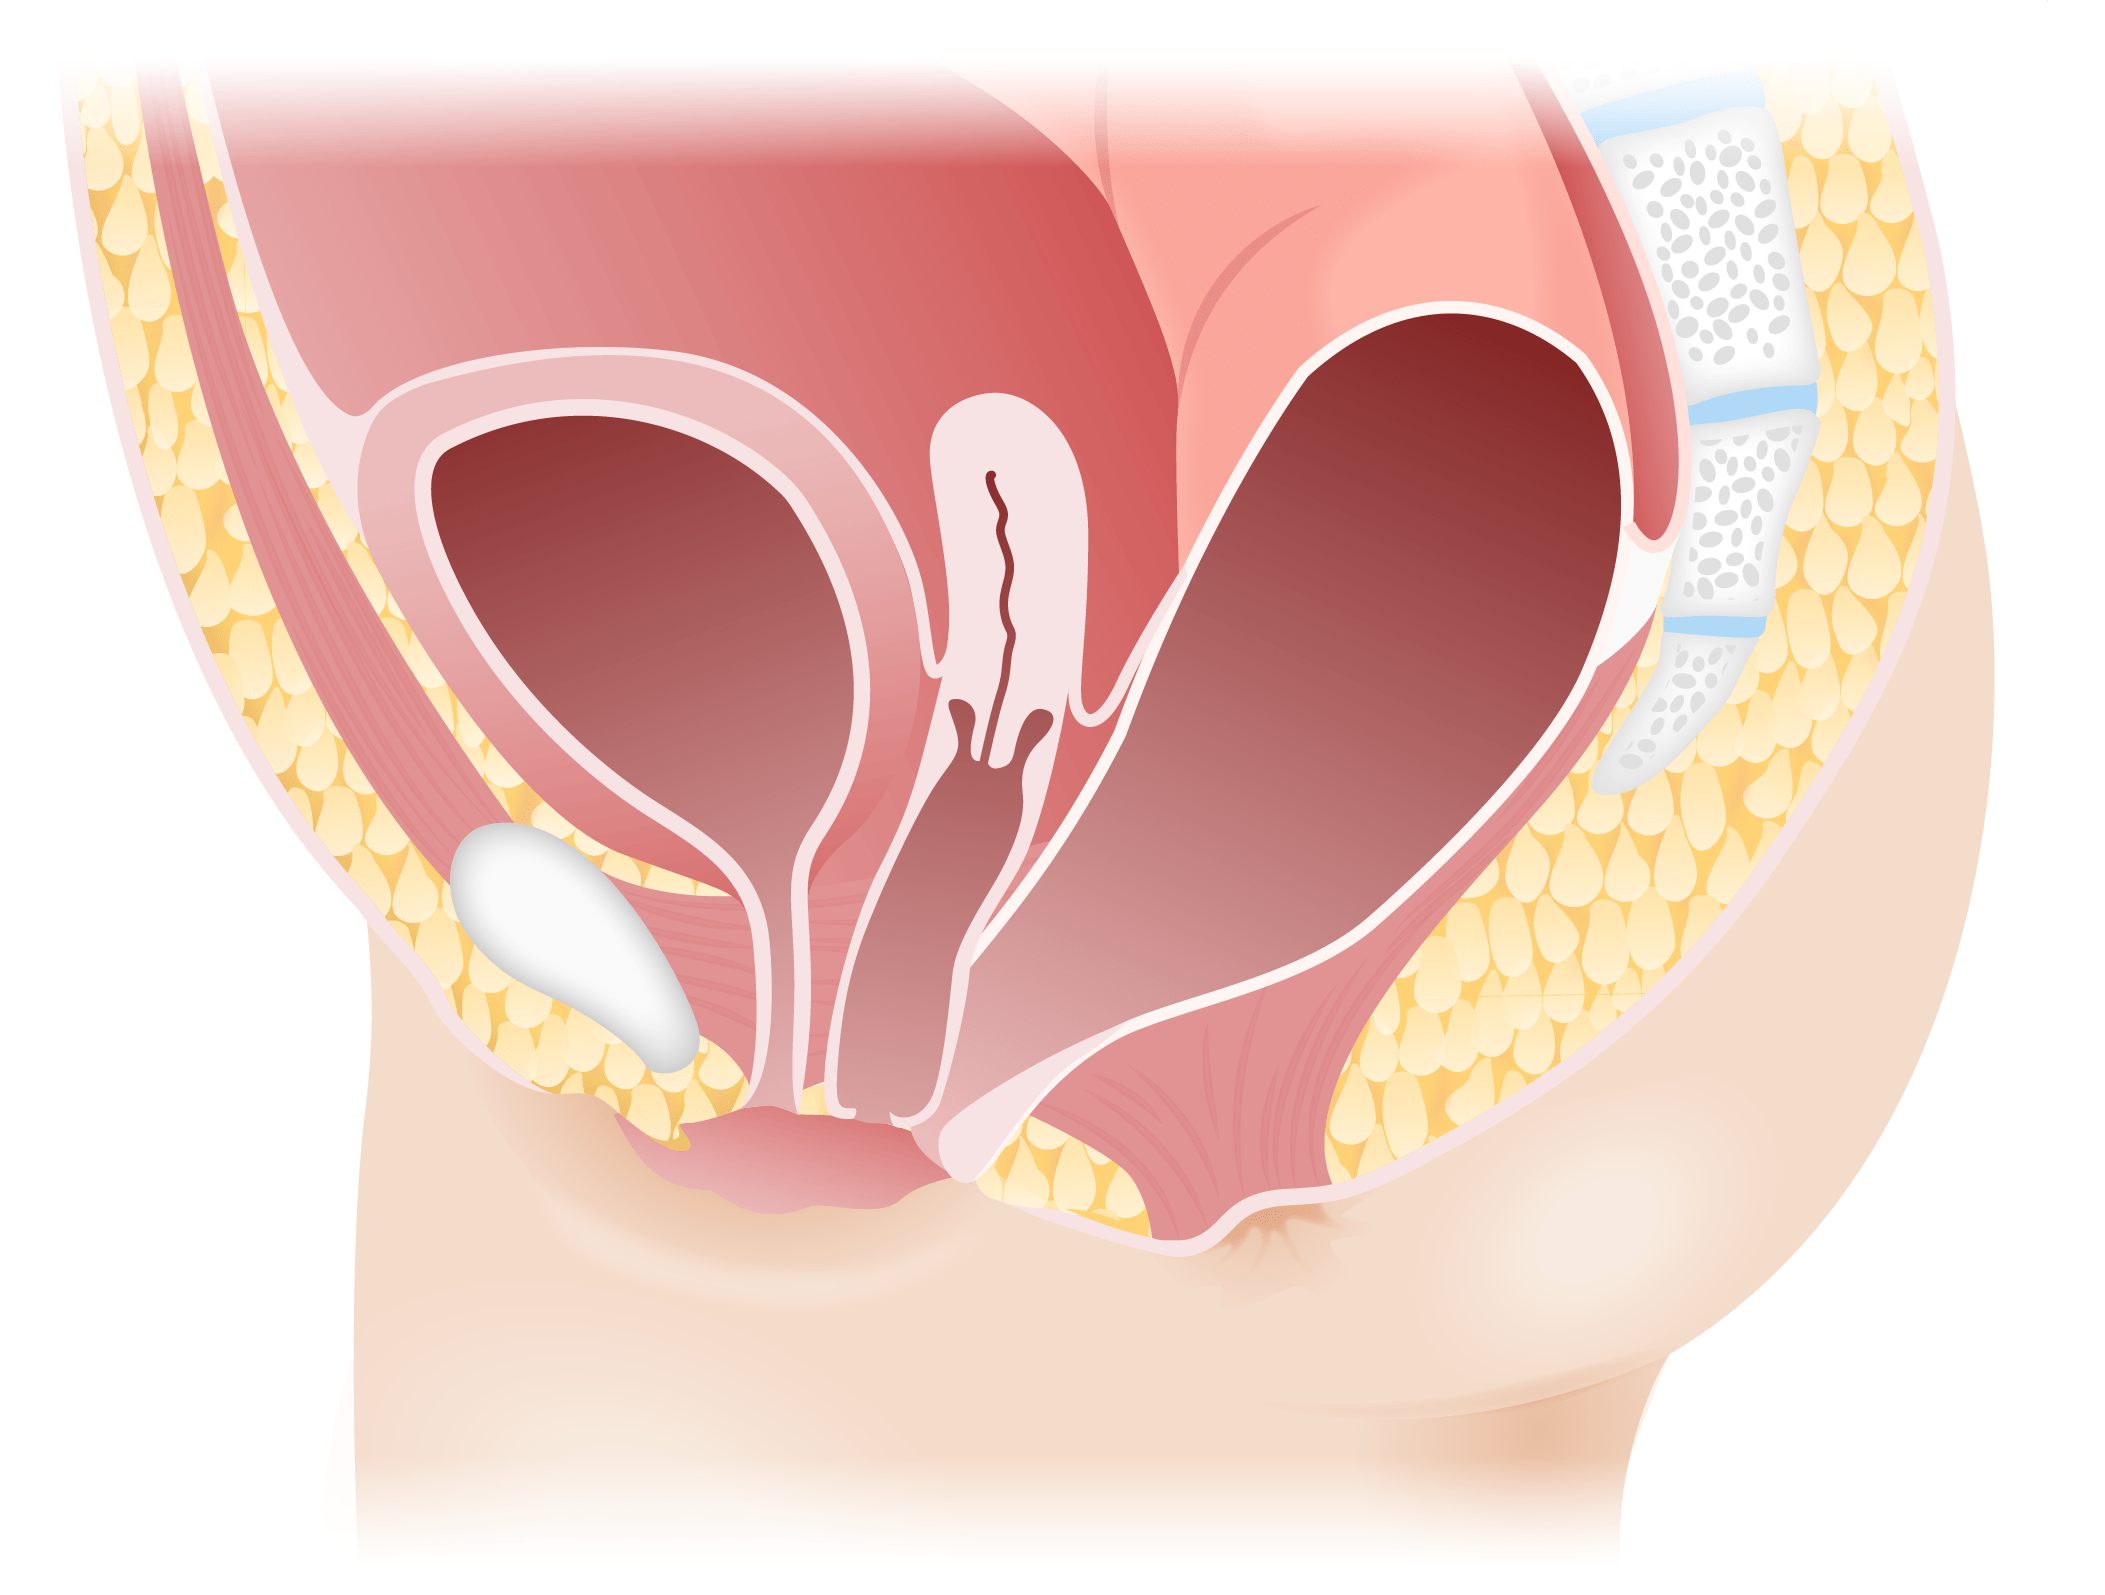 Rectovestibular fistula in females